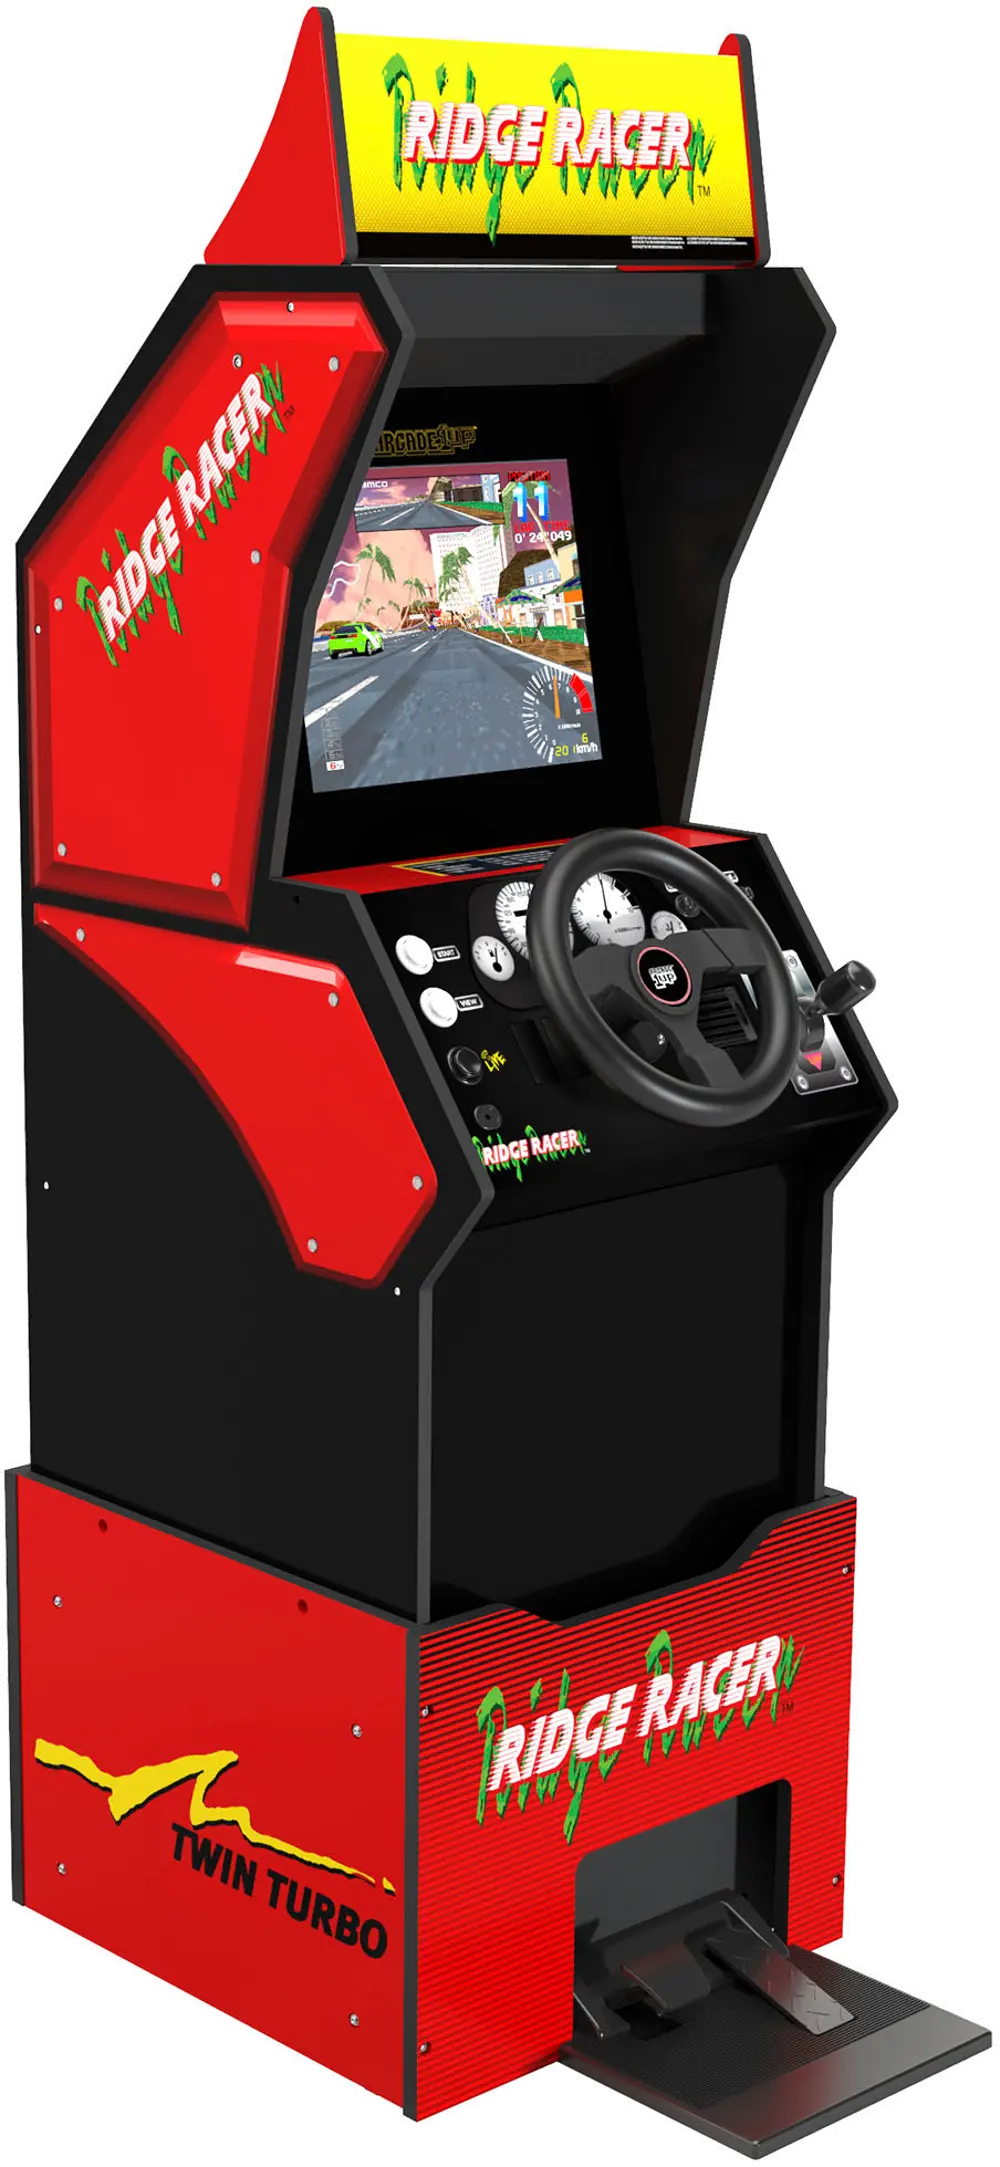 RID-A-10175 Arcade1Up - Ridge Racer Stand Up Arcade-1